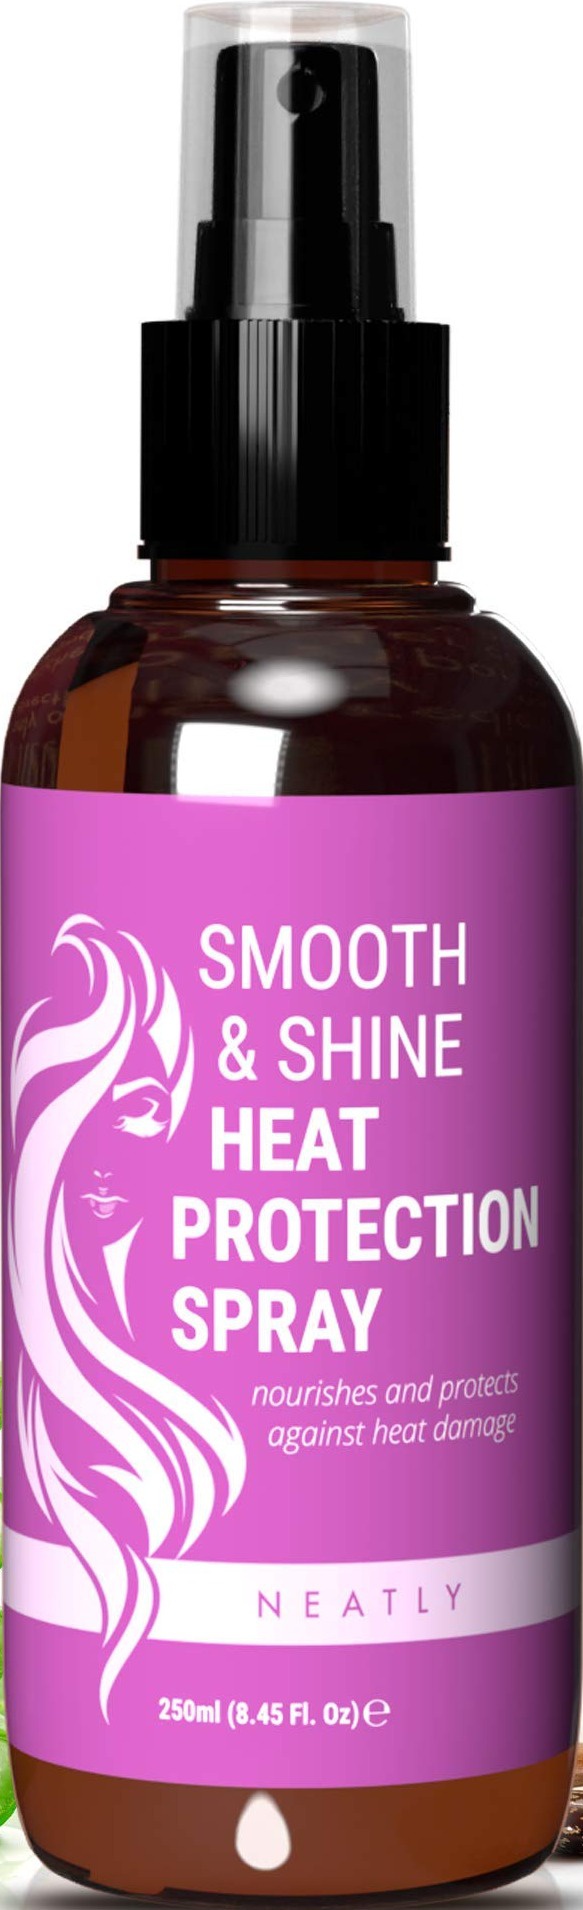 Neatly Heat Protection Spray For Hair